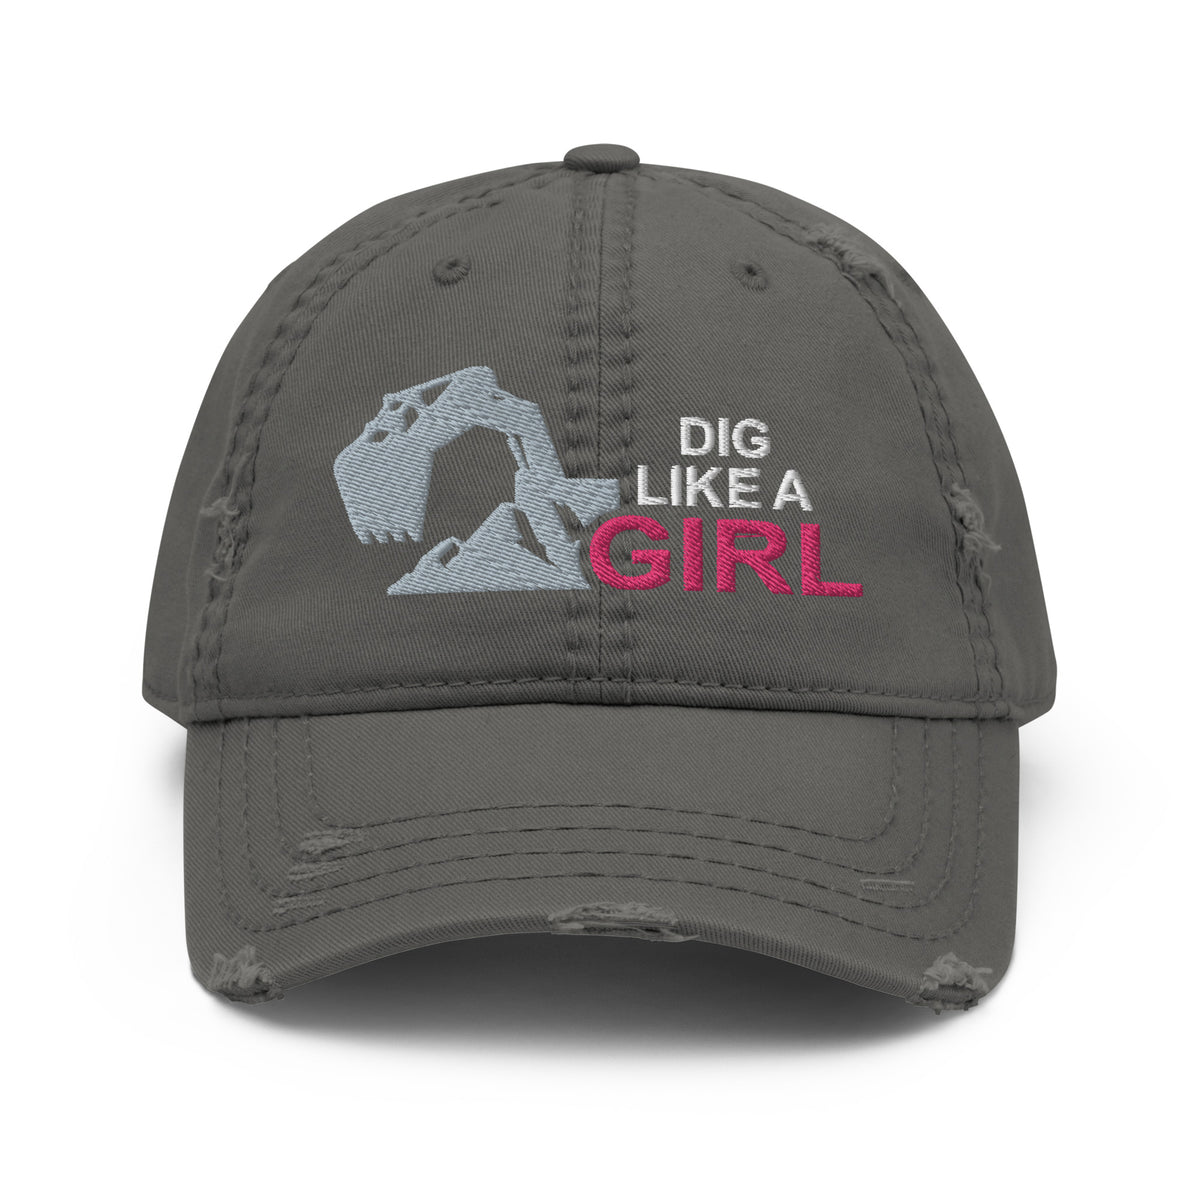 Excavator - Dig Like A Girl - Distressed Dad Hat